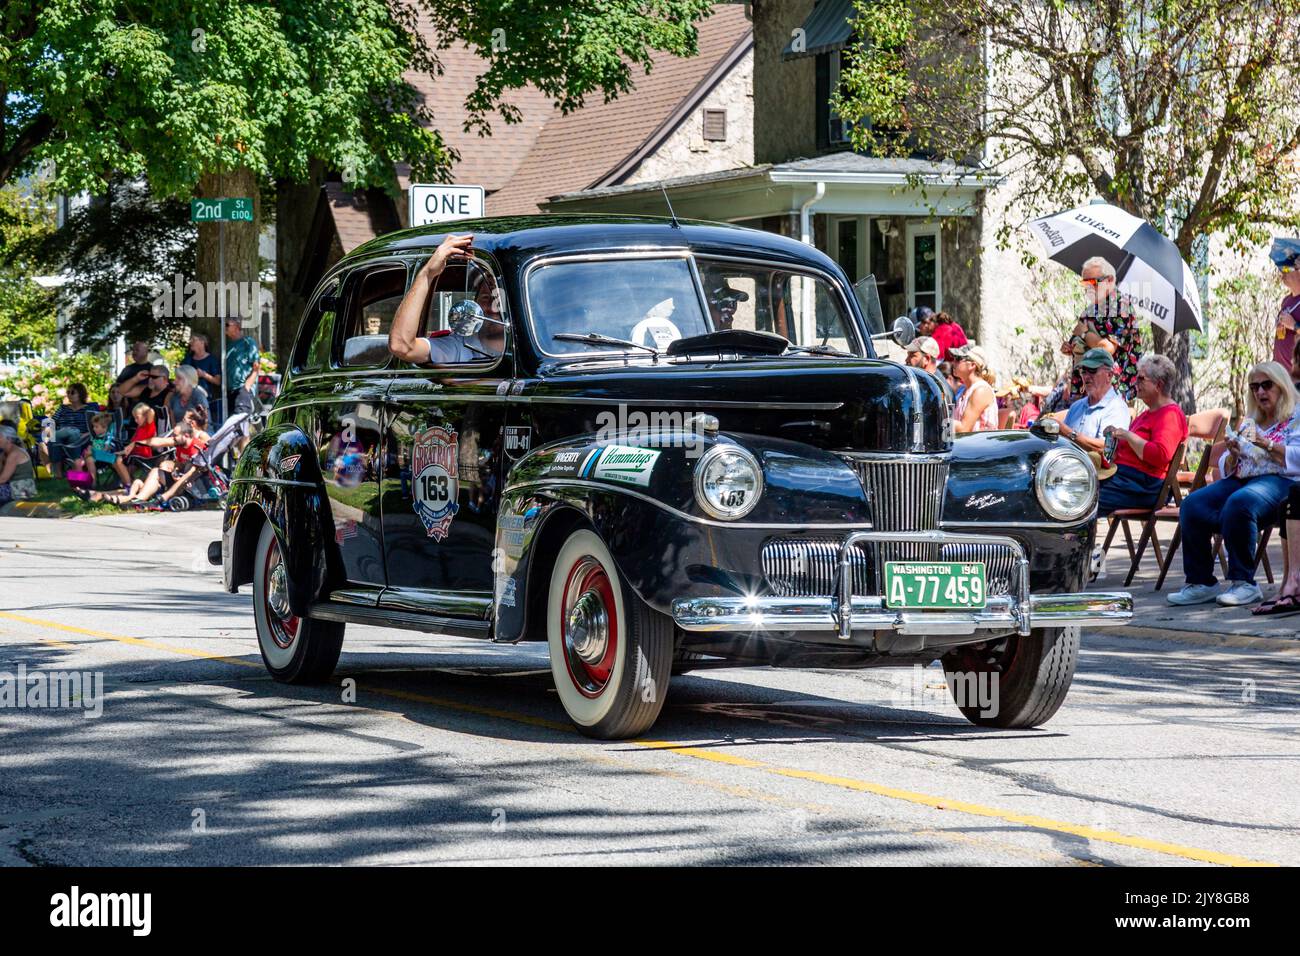 Ein 1941 Ford Super Deluxe, Hemmings Motor News Great Race, Teilnehmer, nimmt an der Auburn Cord Duesenberg Festival Parade in Auburn, Indiana, USA, Teil. Stockfoto